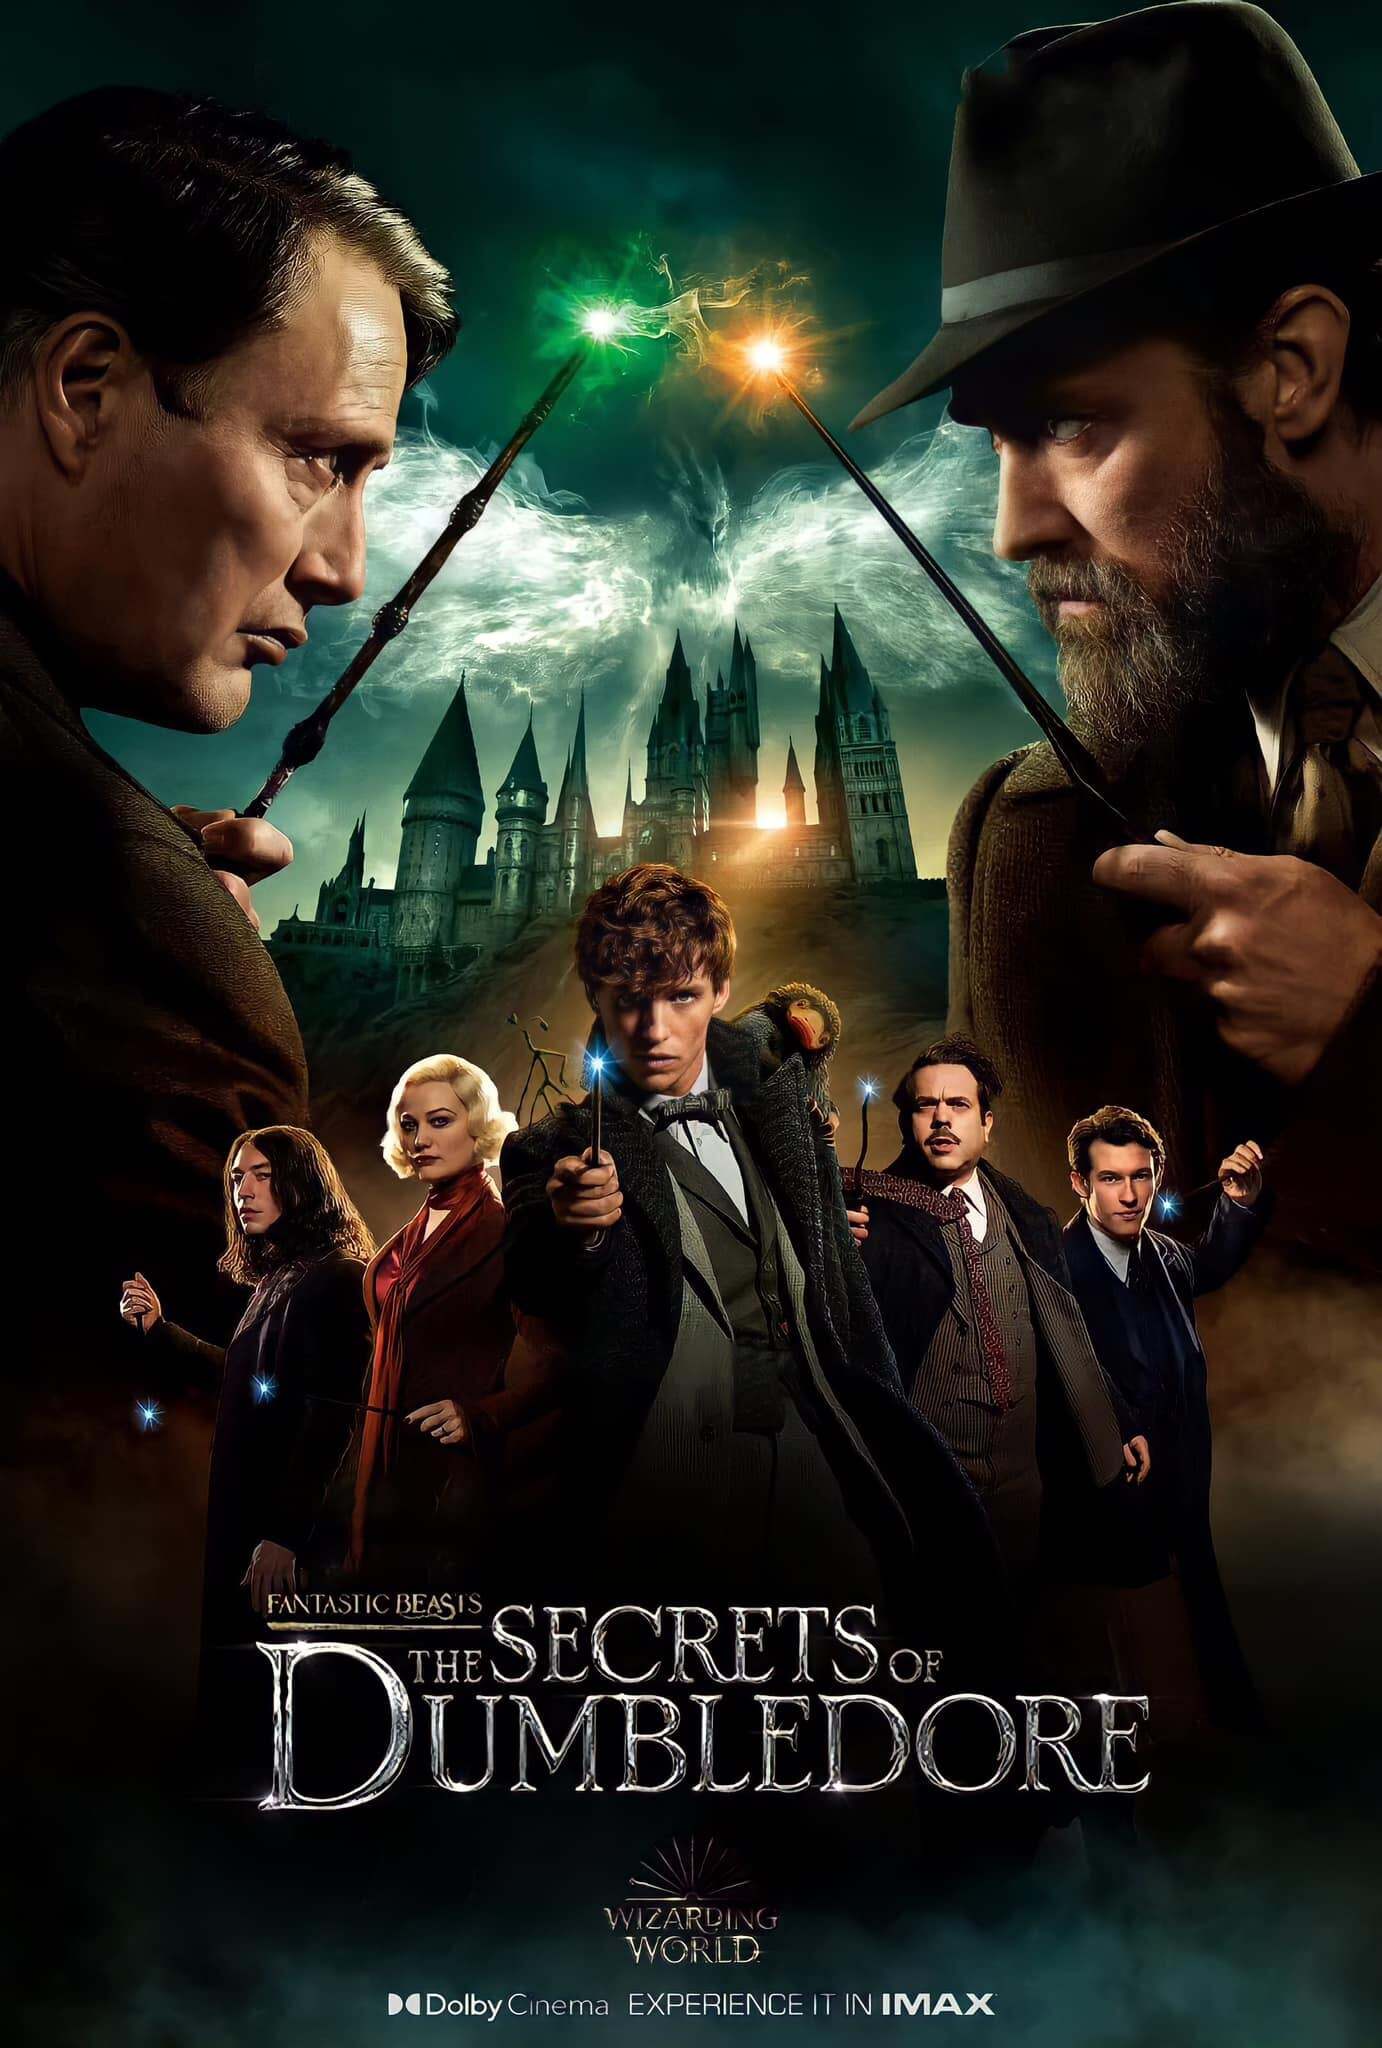 Les Animaux Fantastiques 3 : Les Secrets de Dumbledore